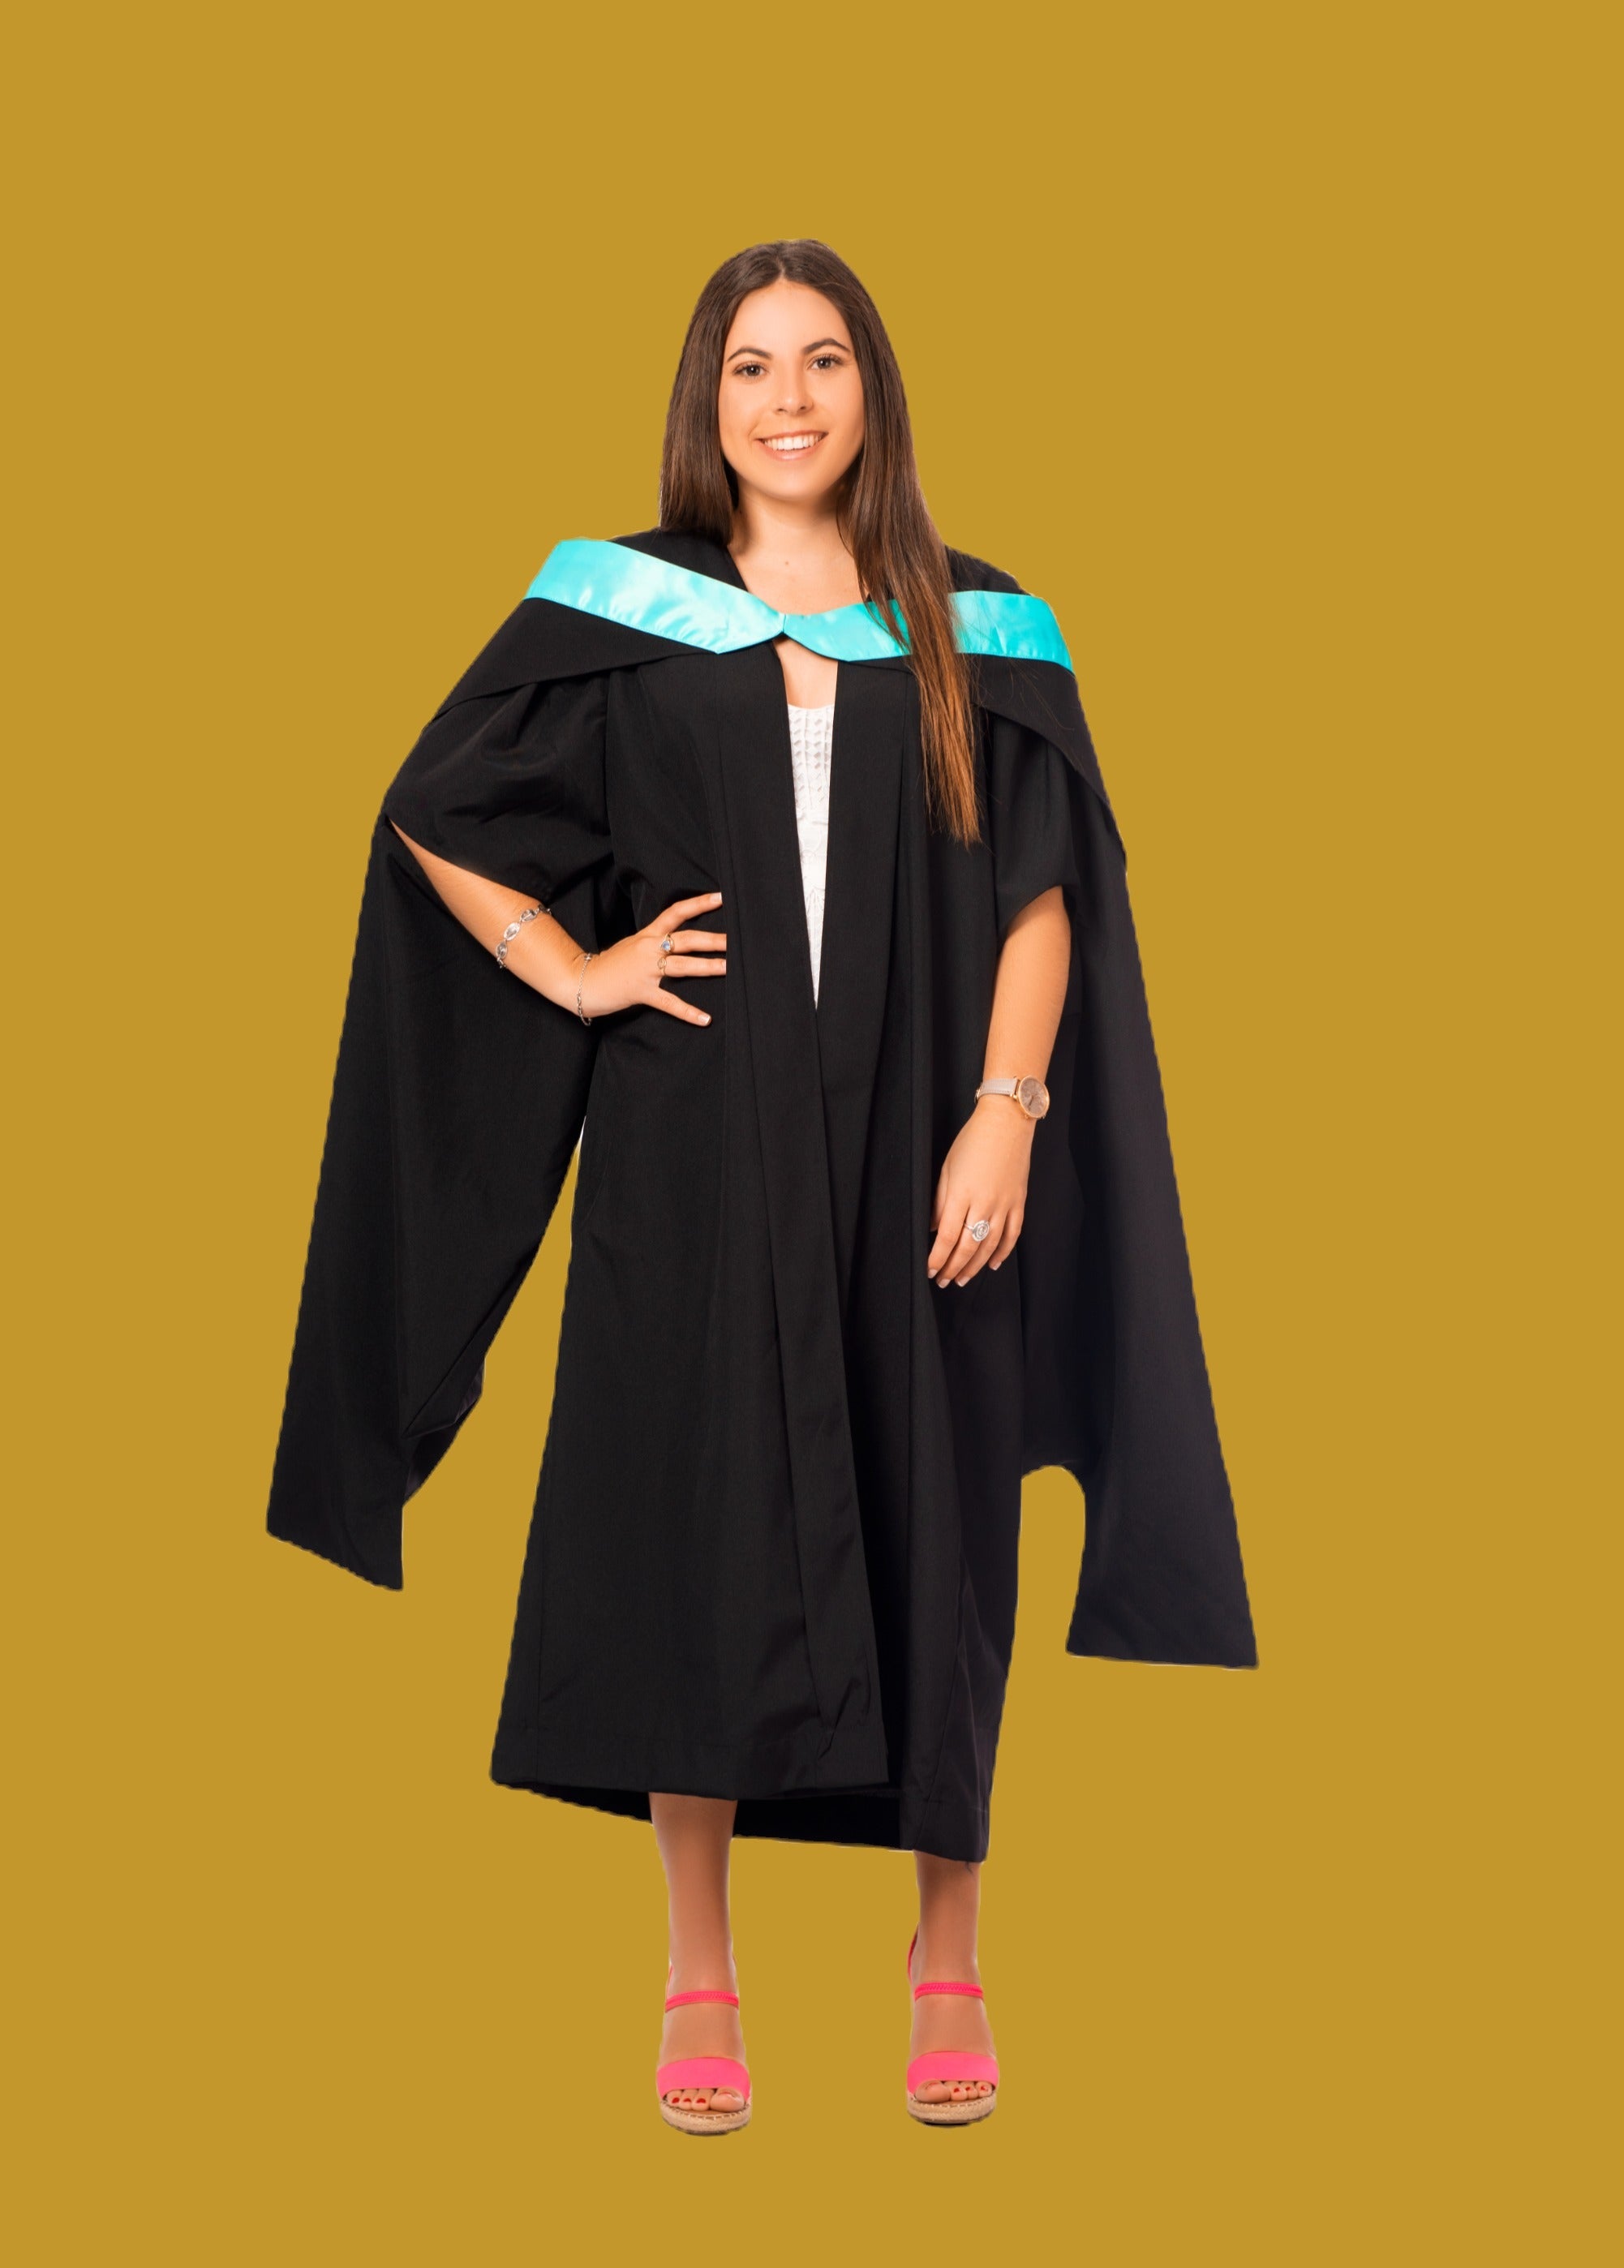 Matte Black Graduation Cap and Gown Set in Multiple Sizes (24 (2'10